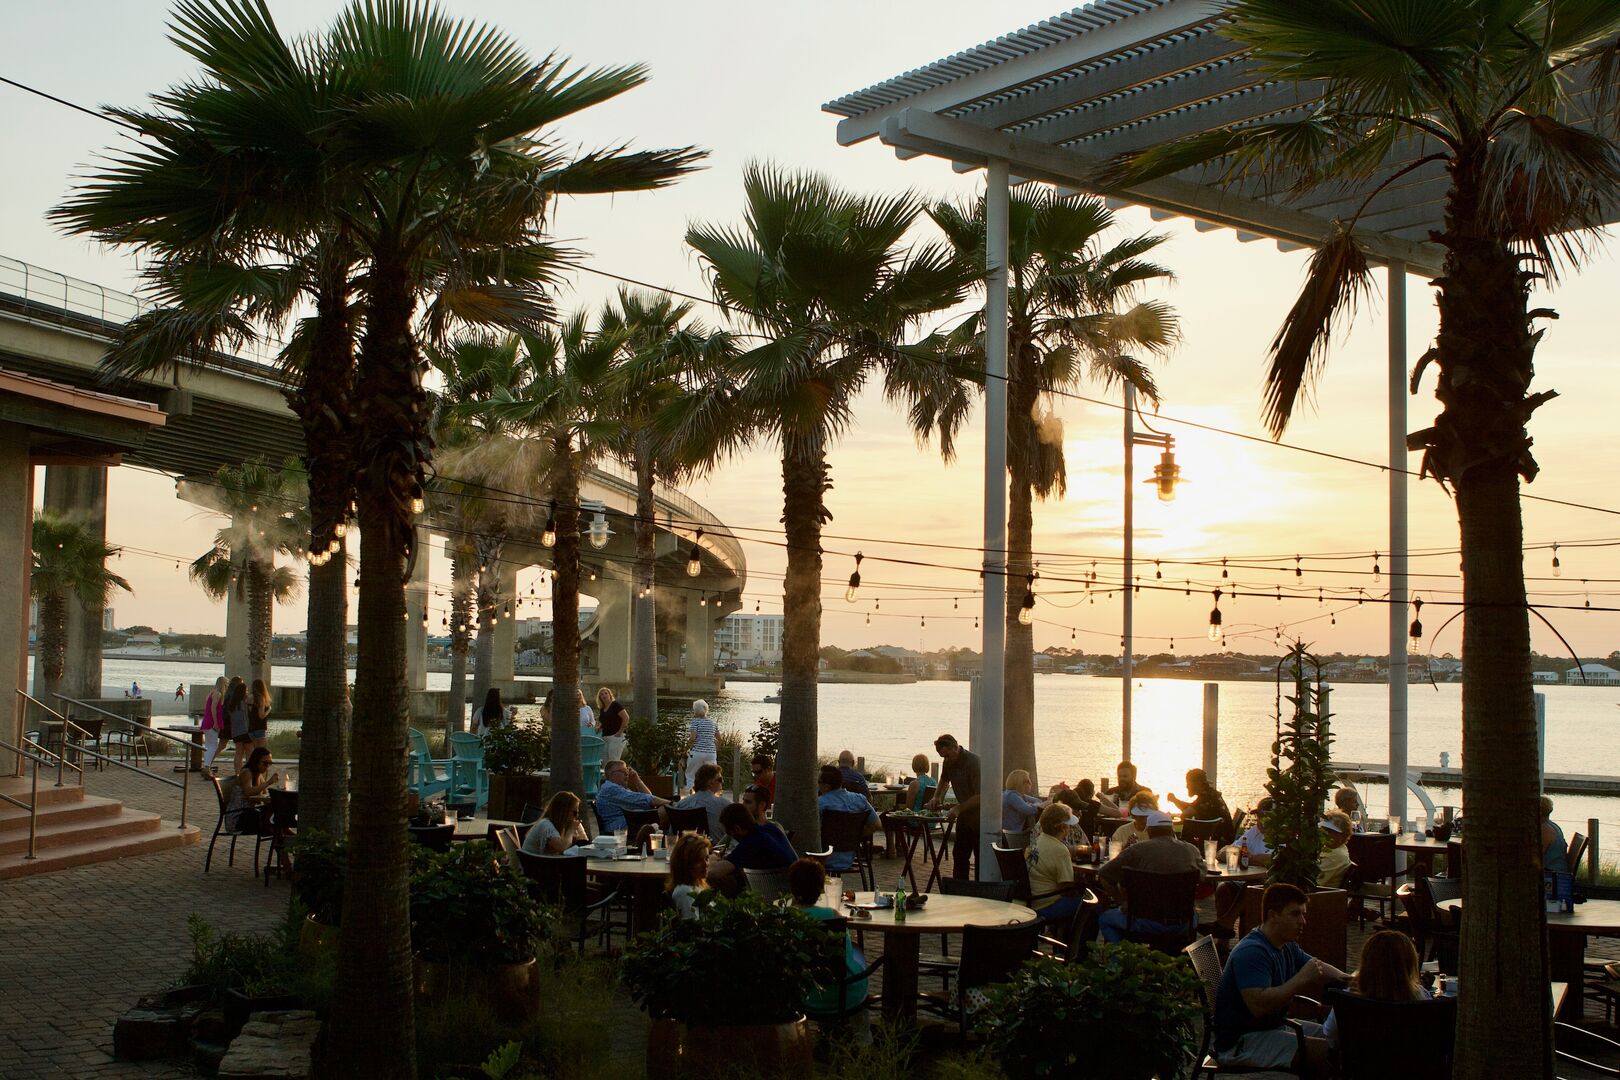 Outdoor Dining at Sunset at Cobalt,  The Restaurant, Orange Beach